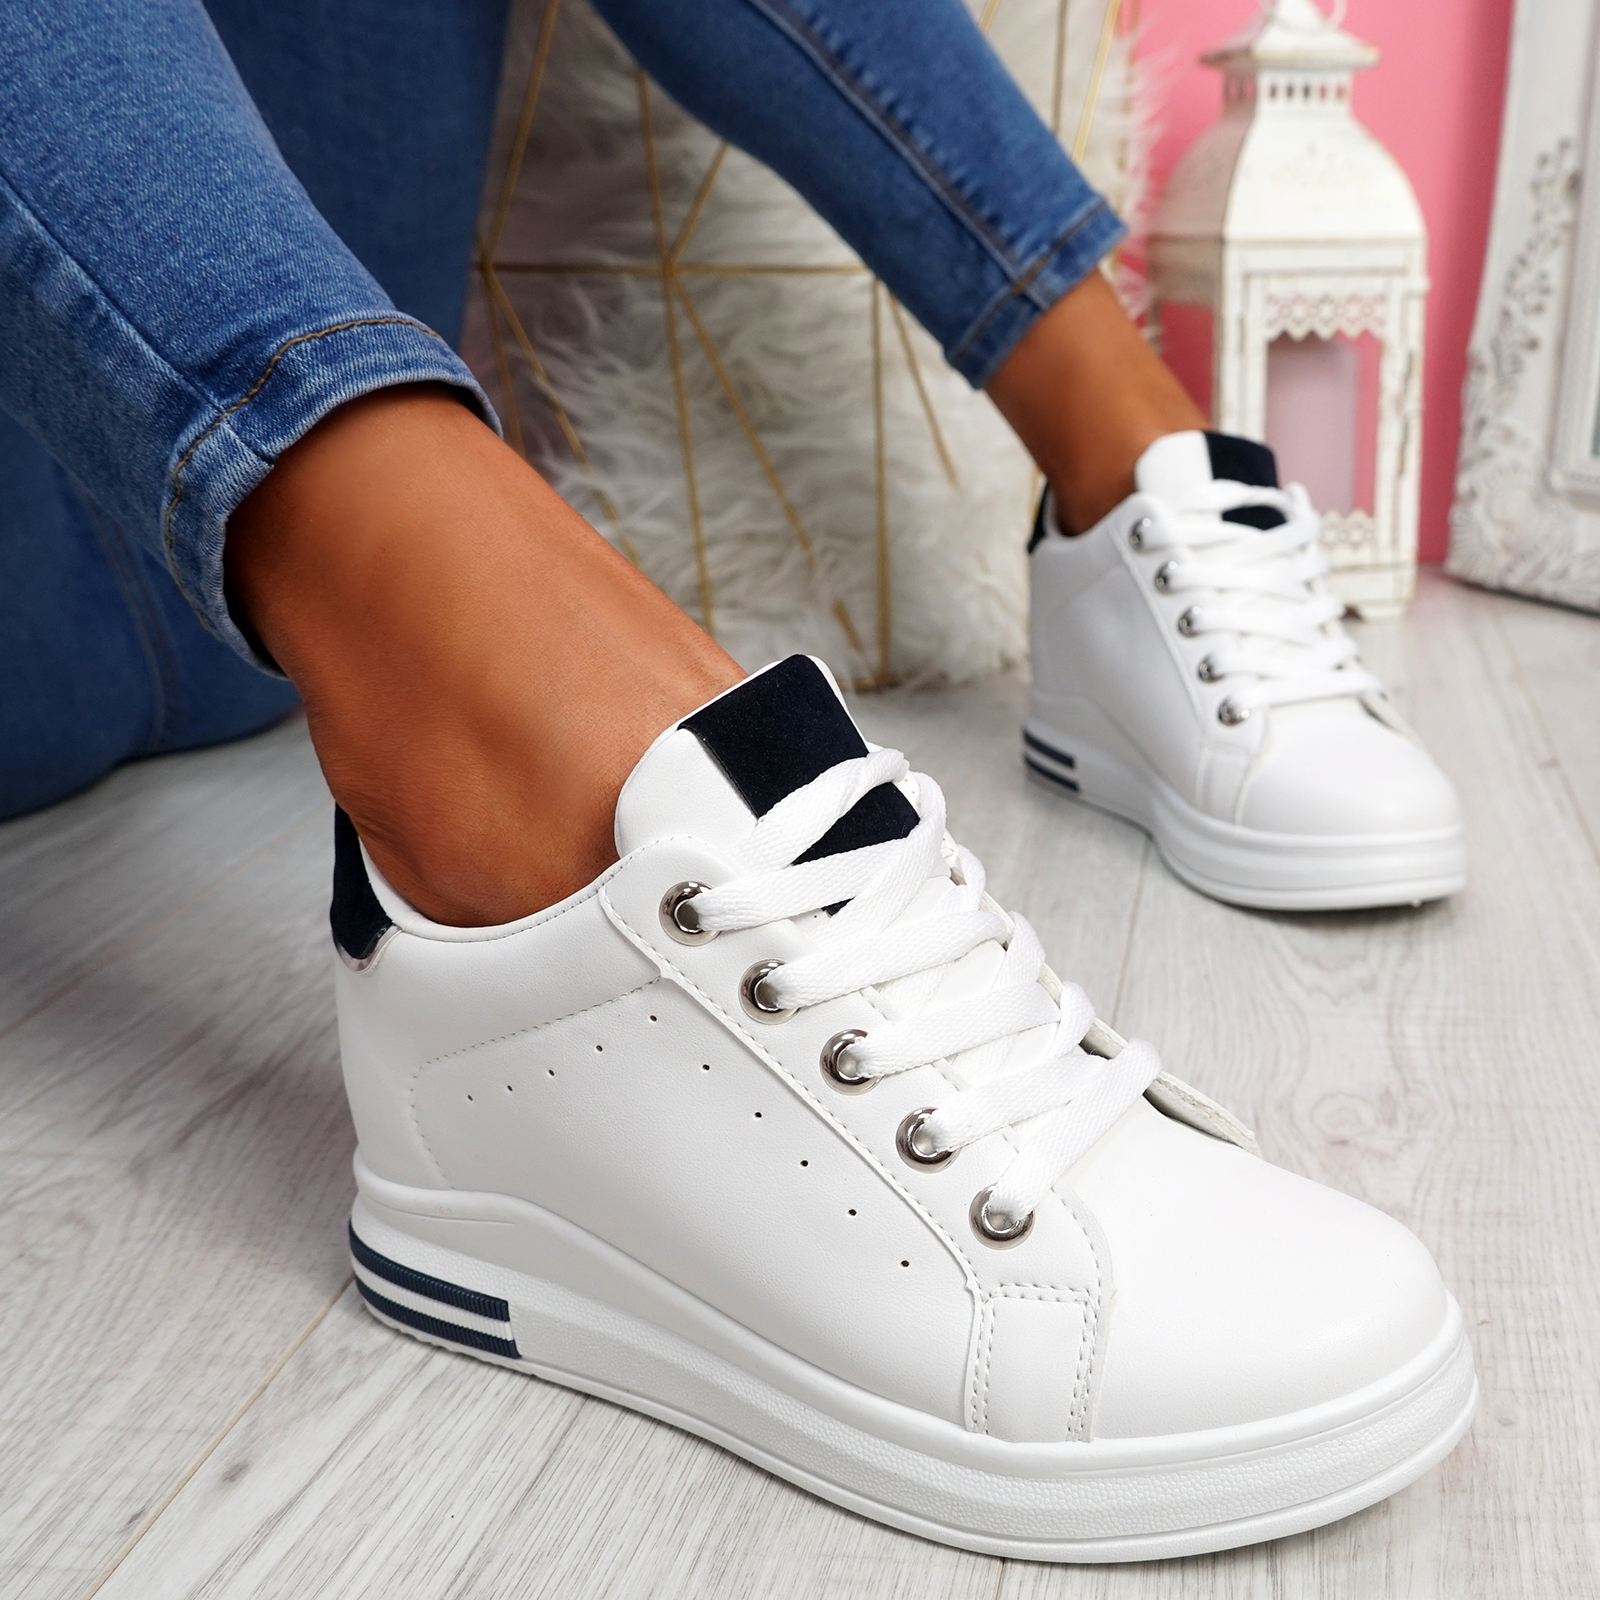 Ebay womens shoes barry white whitney houston